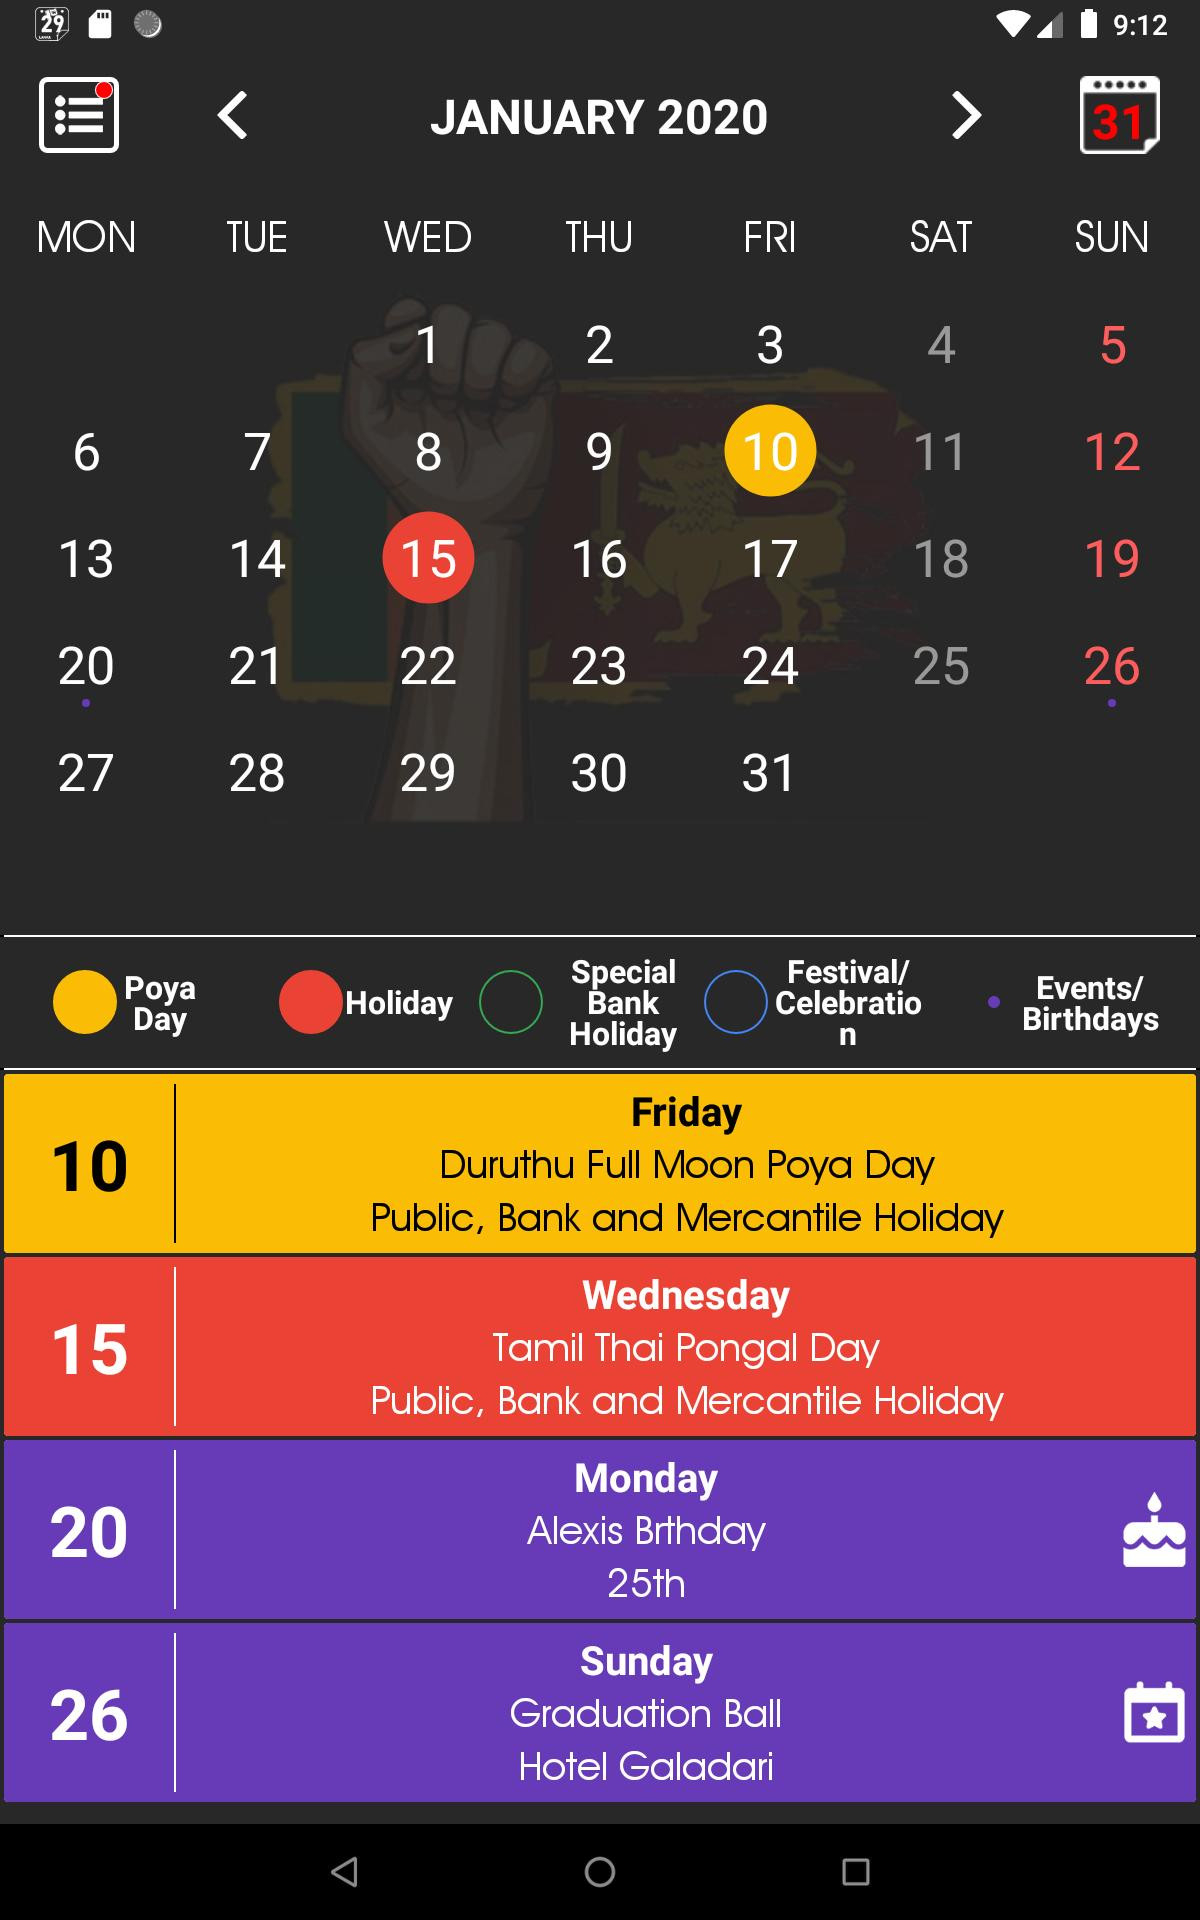 Sri Lanka Calendar 2021 ?? ¦ Sinhala ¦ Holidays For Android - Apk Download-2021 Srilanka Mercantile Holidays